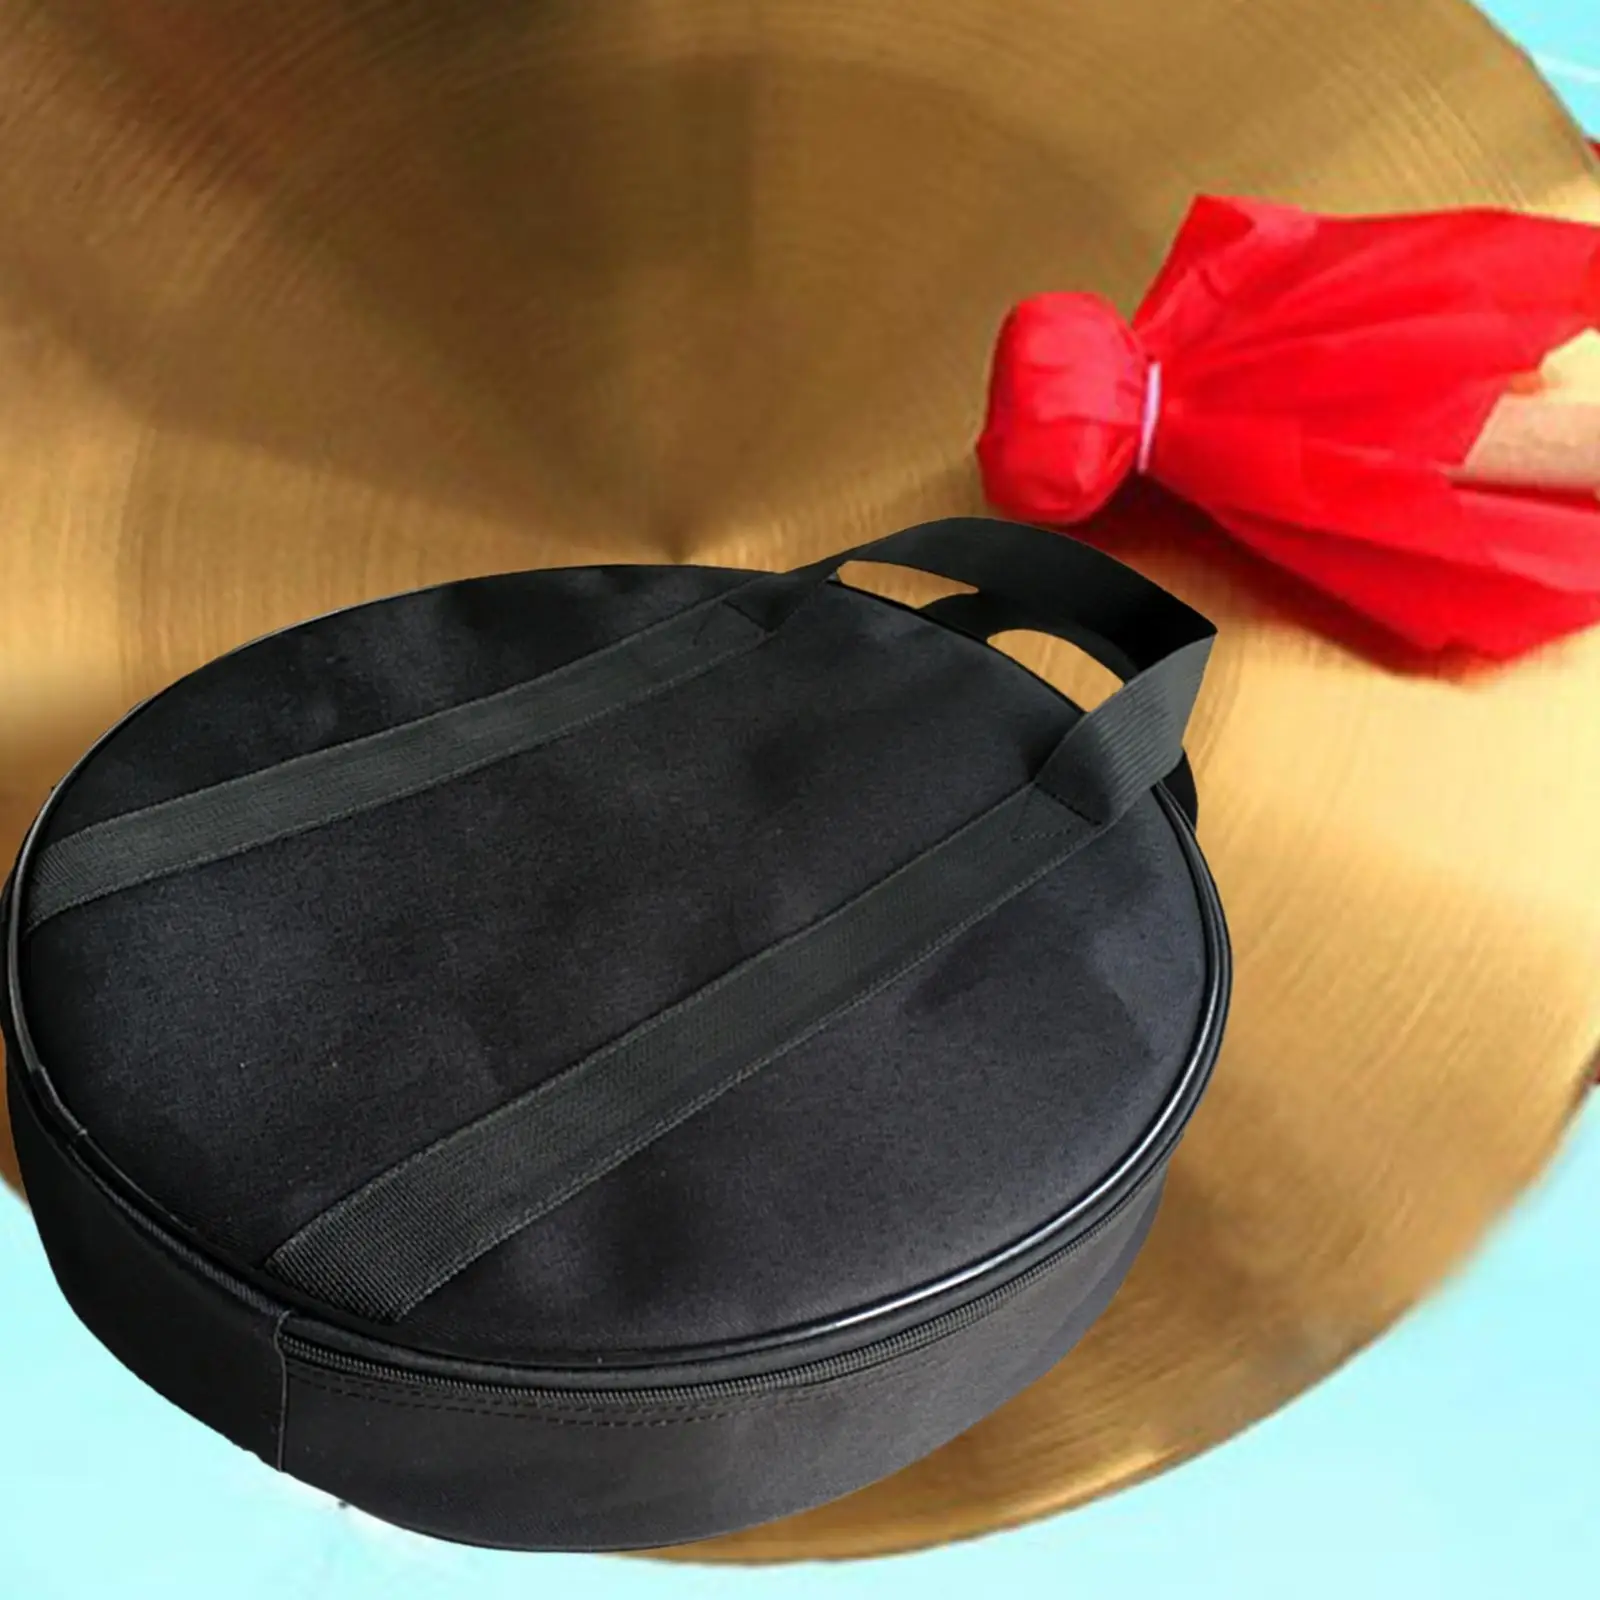 Deluxe Cymbal Bag Backpack Straps Wear Resistant Accessories Bag Black Durable Bag Backpack Waterproof Carry Case